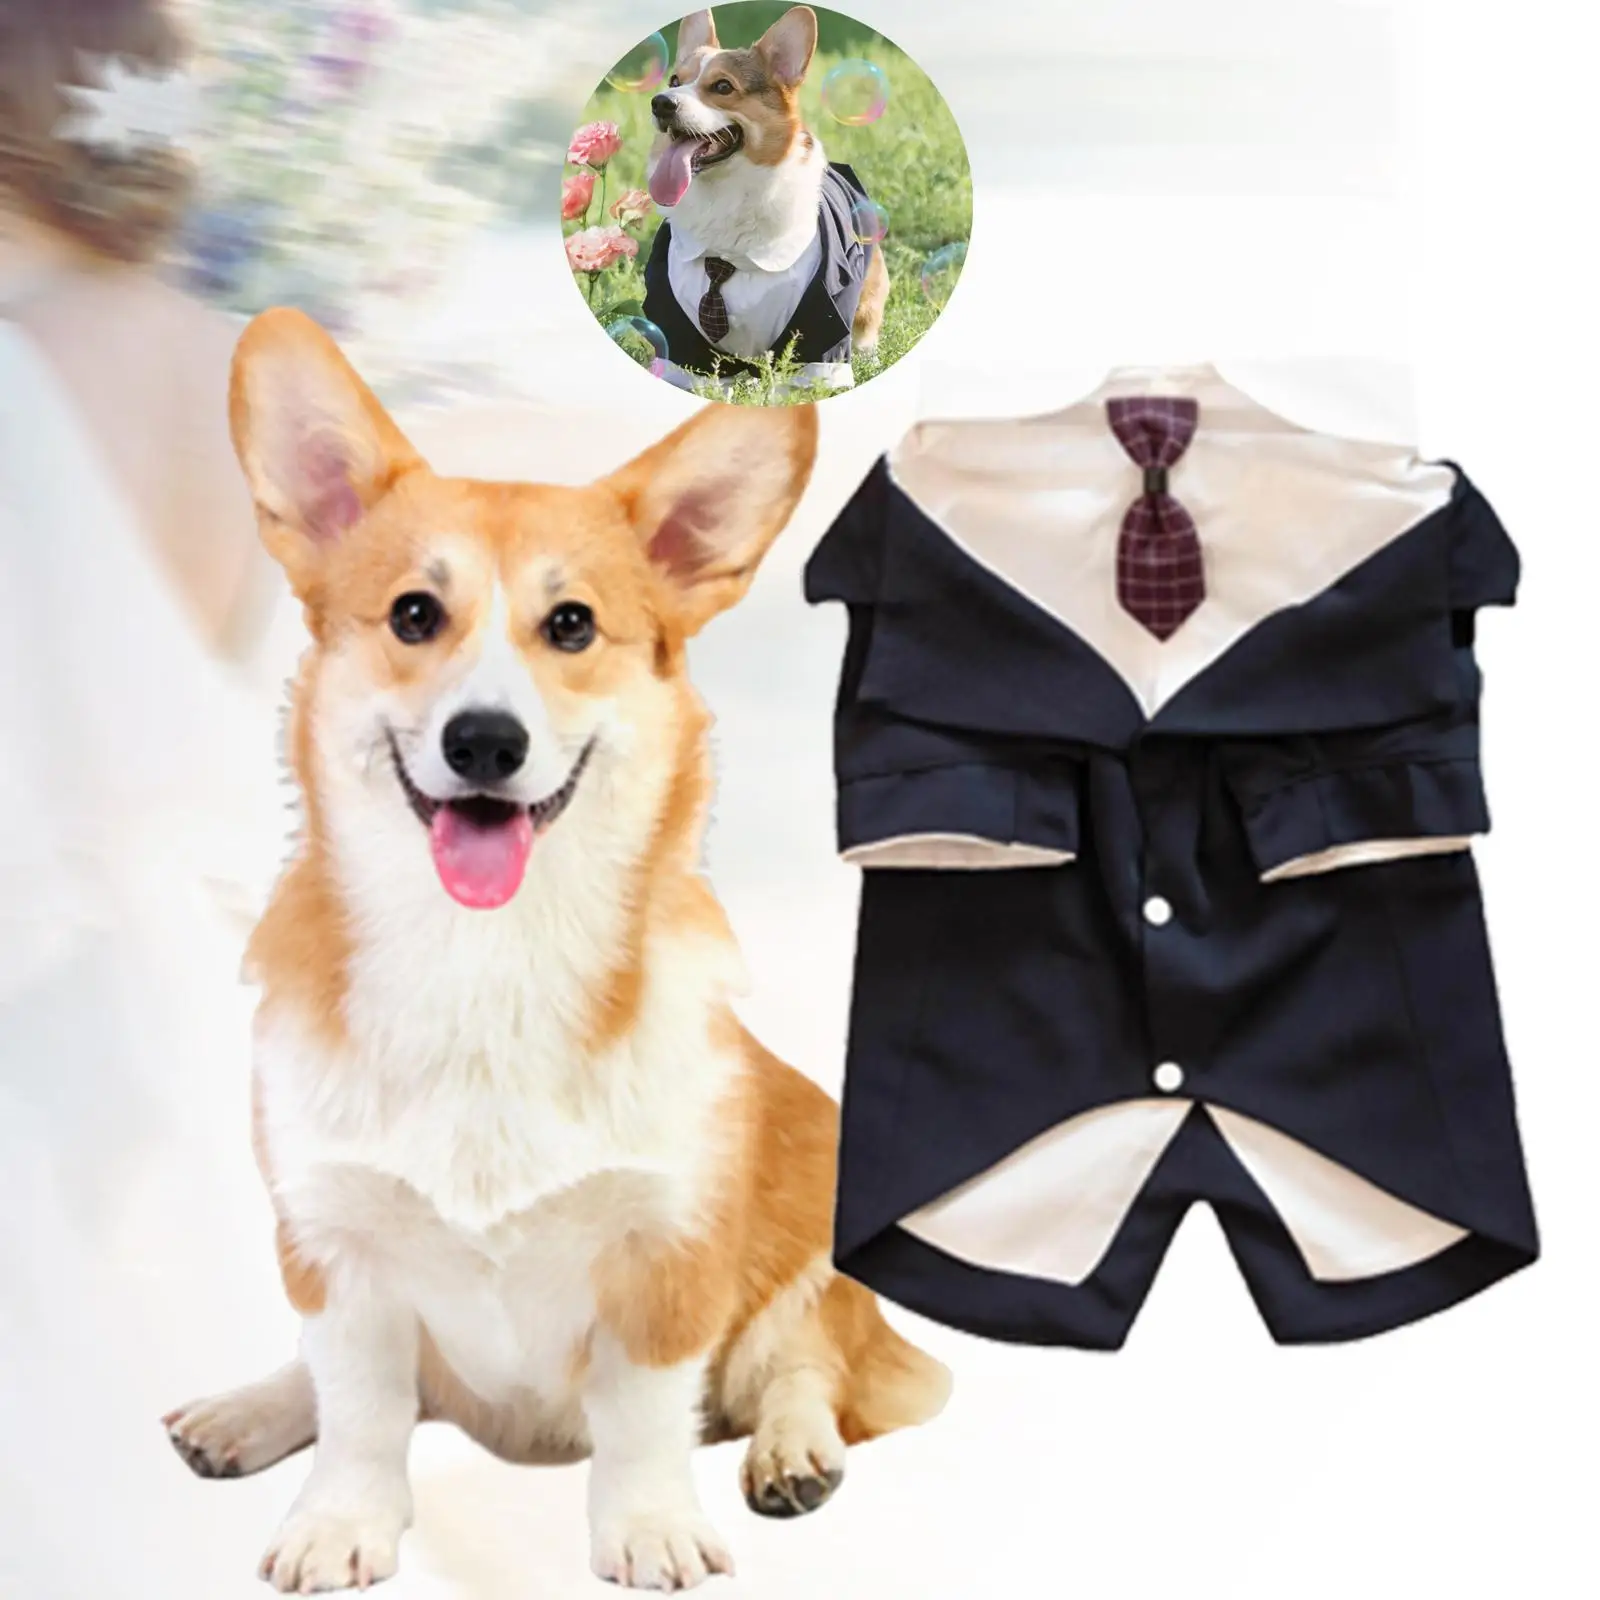 Dog Tuxedo Dog Suit and Bandana Set Elegant Outfit Lightweight Dog Clothes for Christmas Halloween Wedding Cosplay